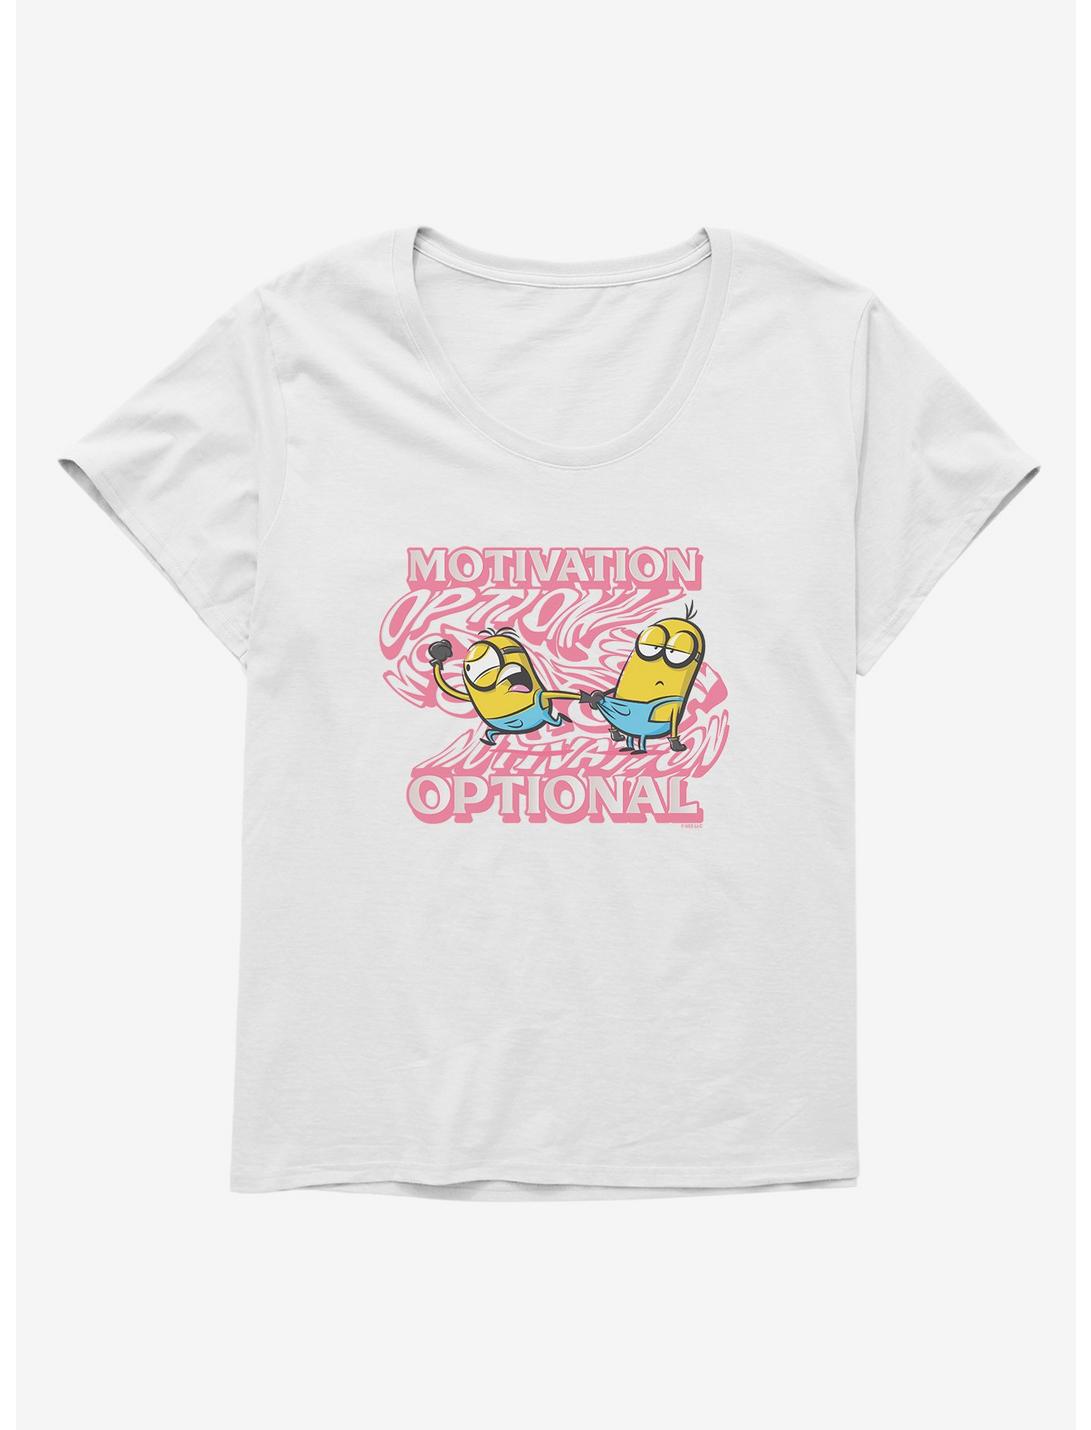 Minions Groovy Motivation Optional Girls T-Shirt Plus Size, WHITE, hi-res